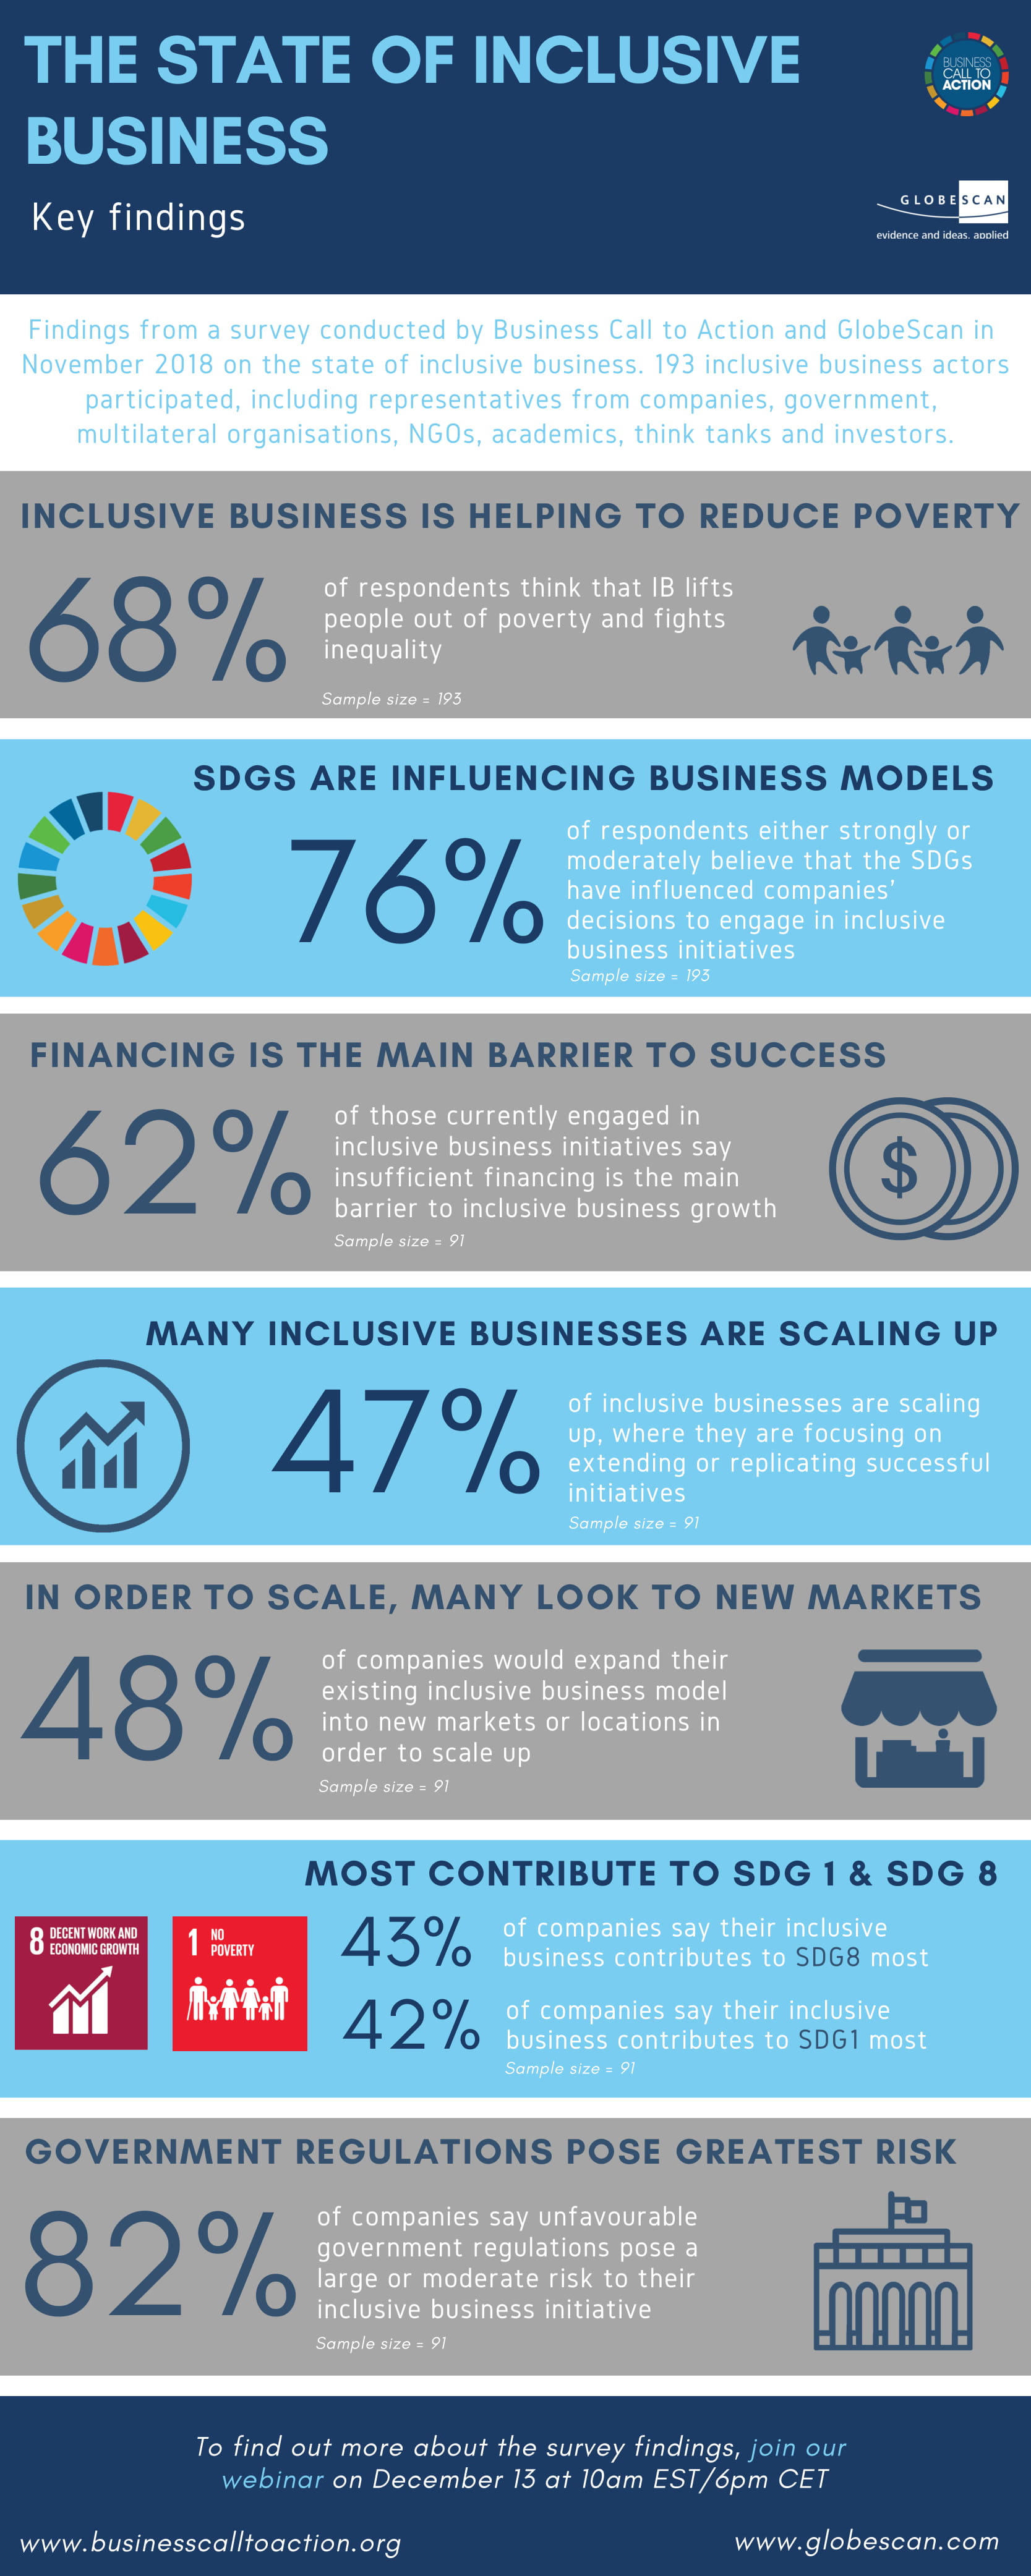 BCtA / GlobeScan Inclusive Business Survey